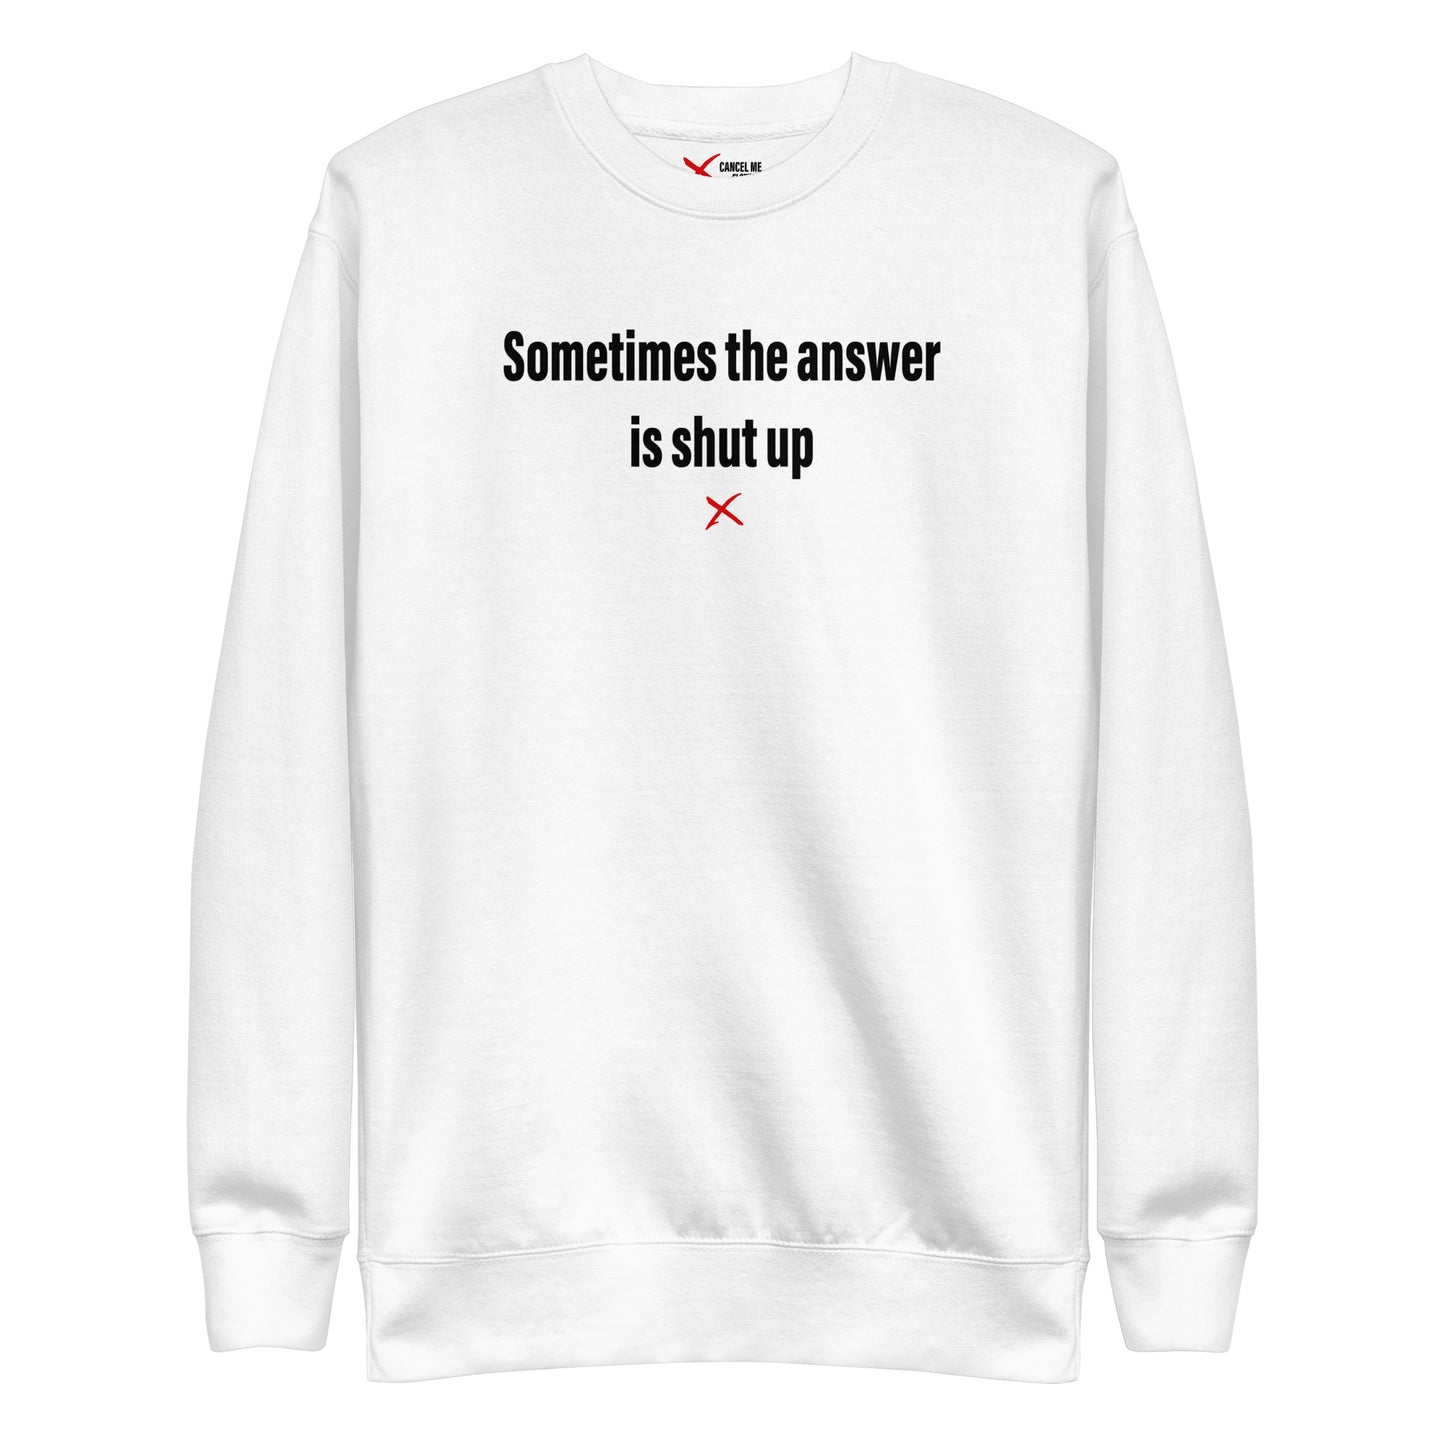 Sometimes the answer is shut up - Sweatshirt